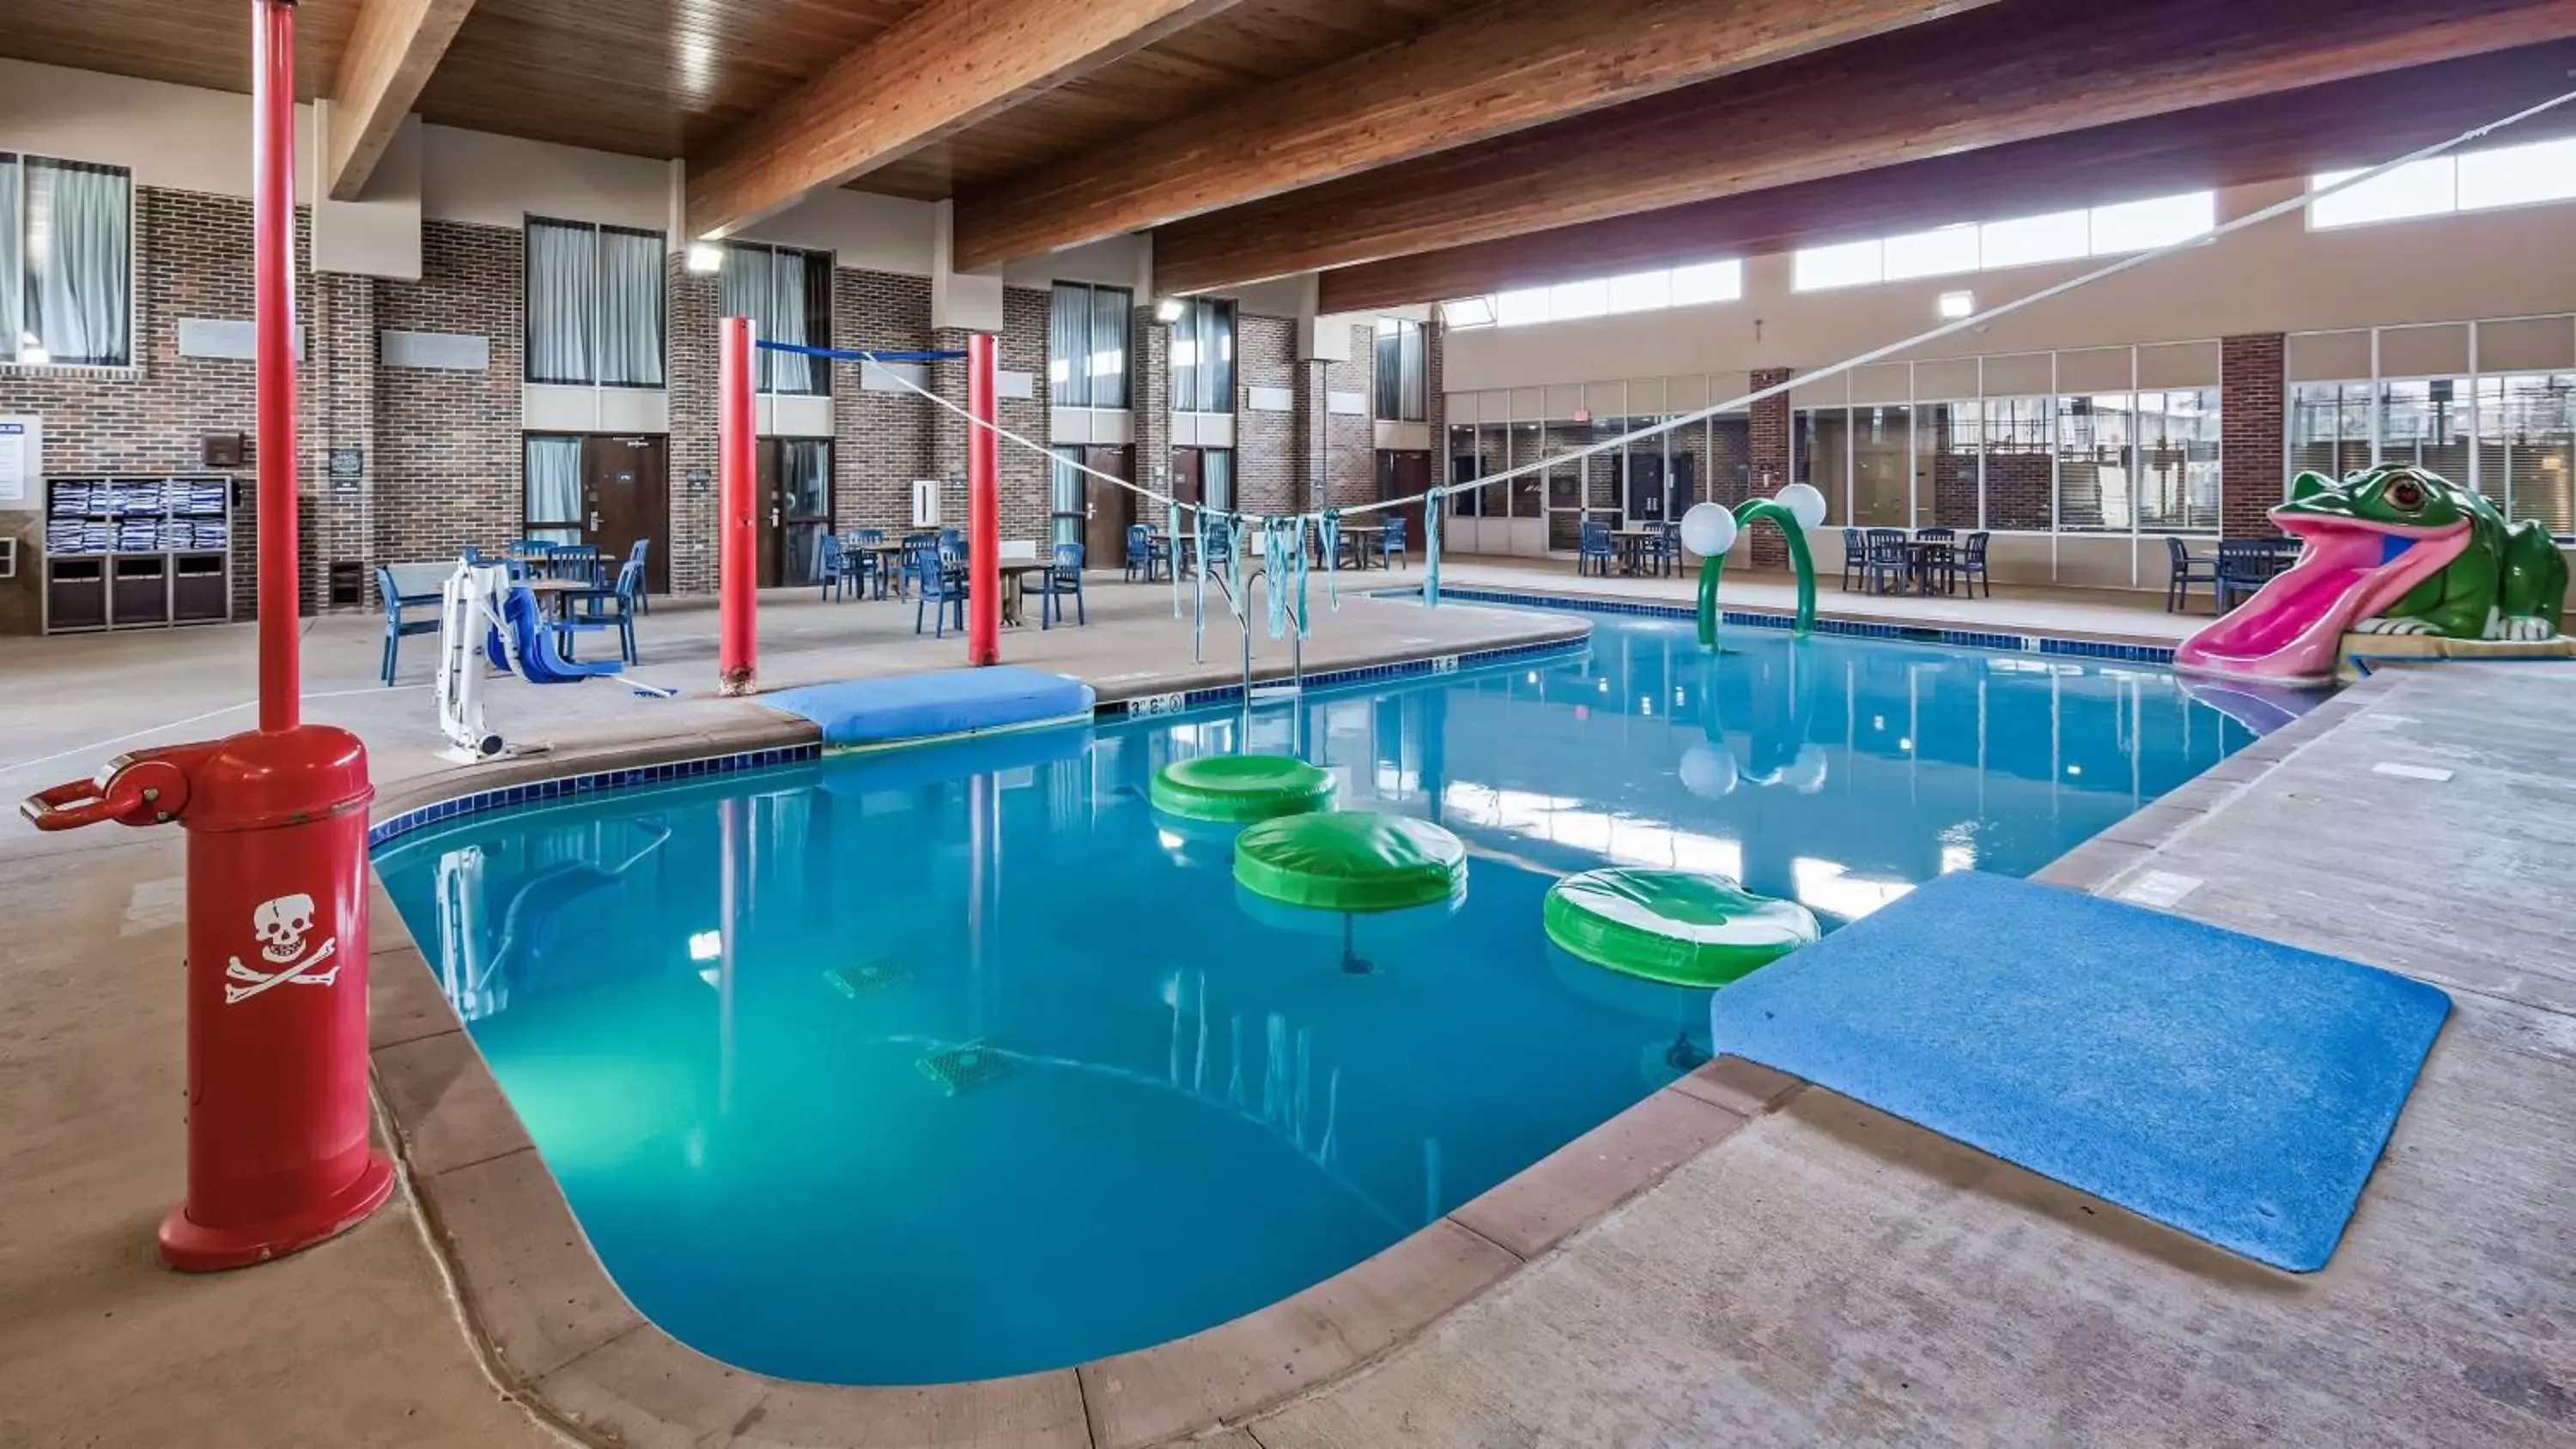 On site, Swimming Pool in Best Western Ramkota Hotel Aberdeen